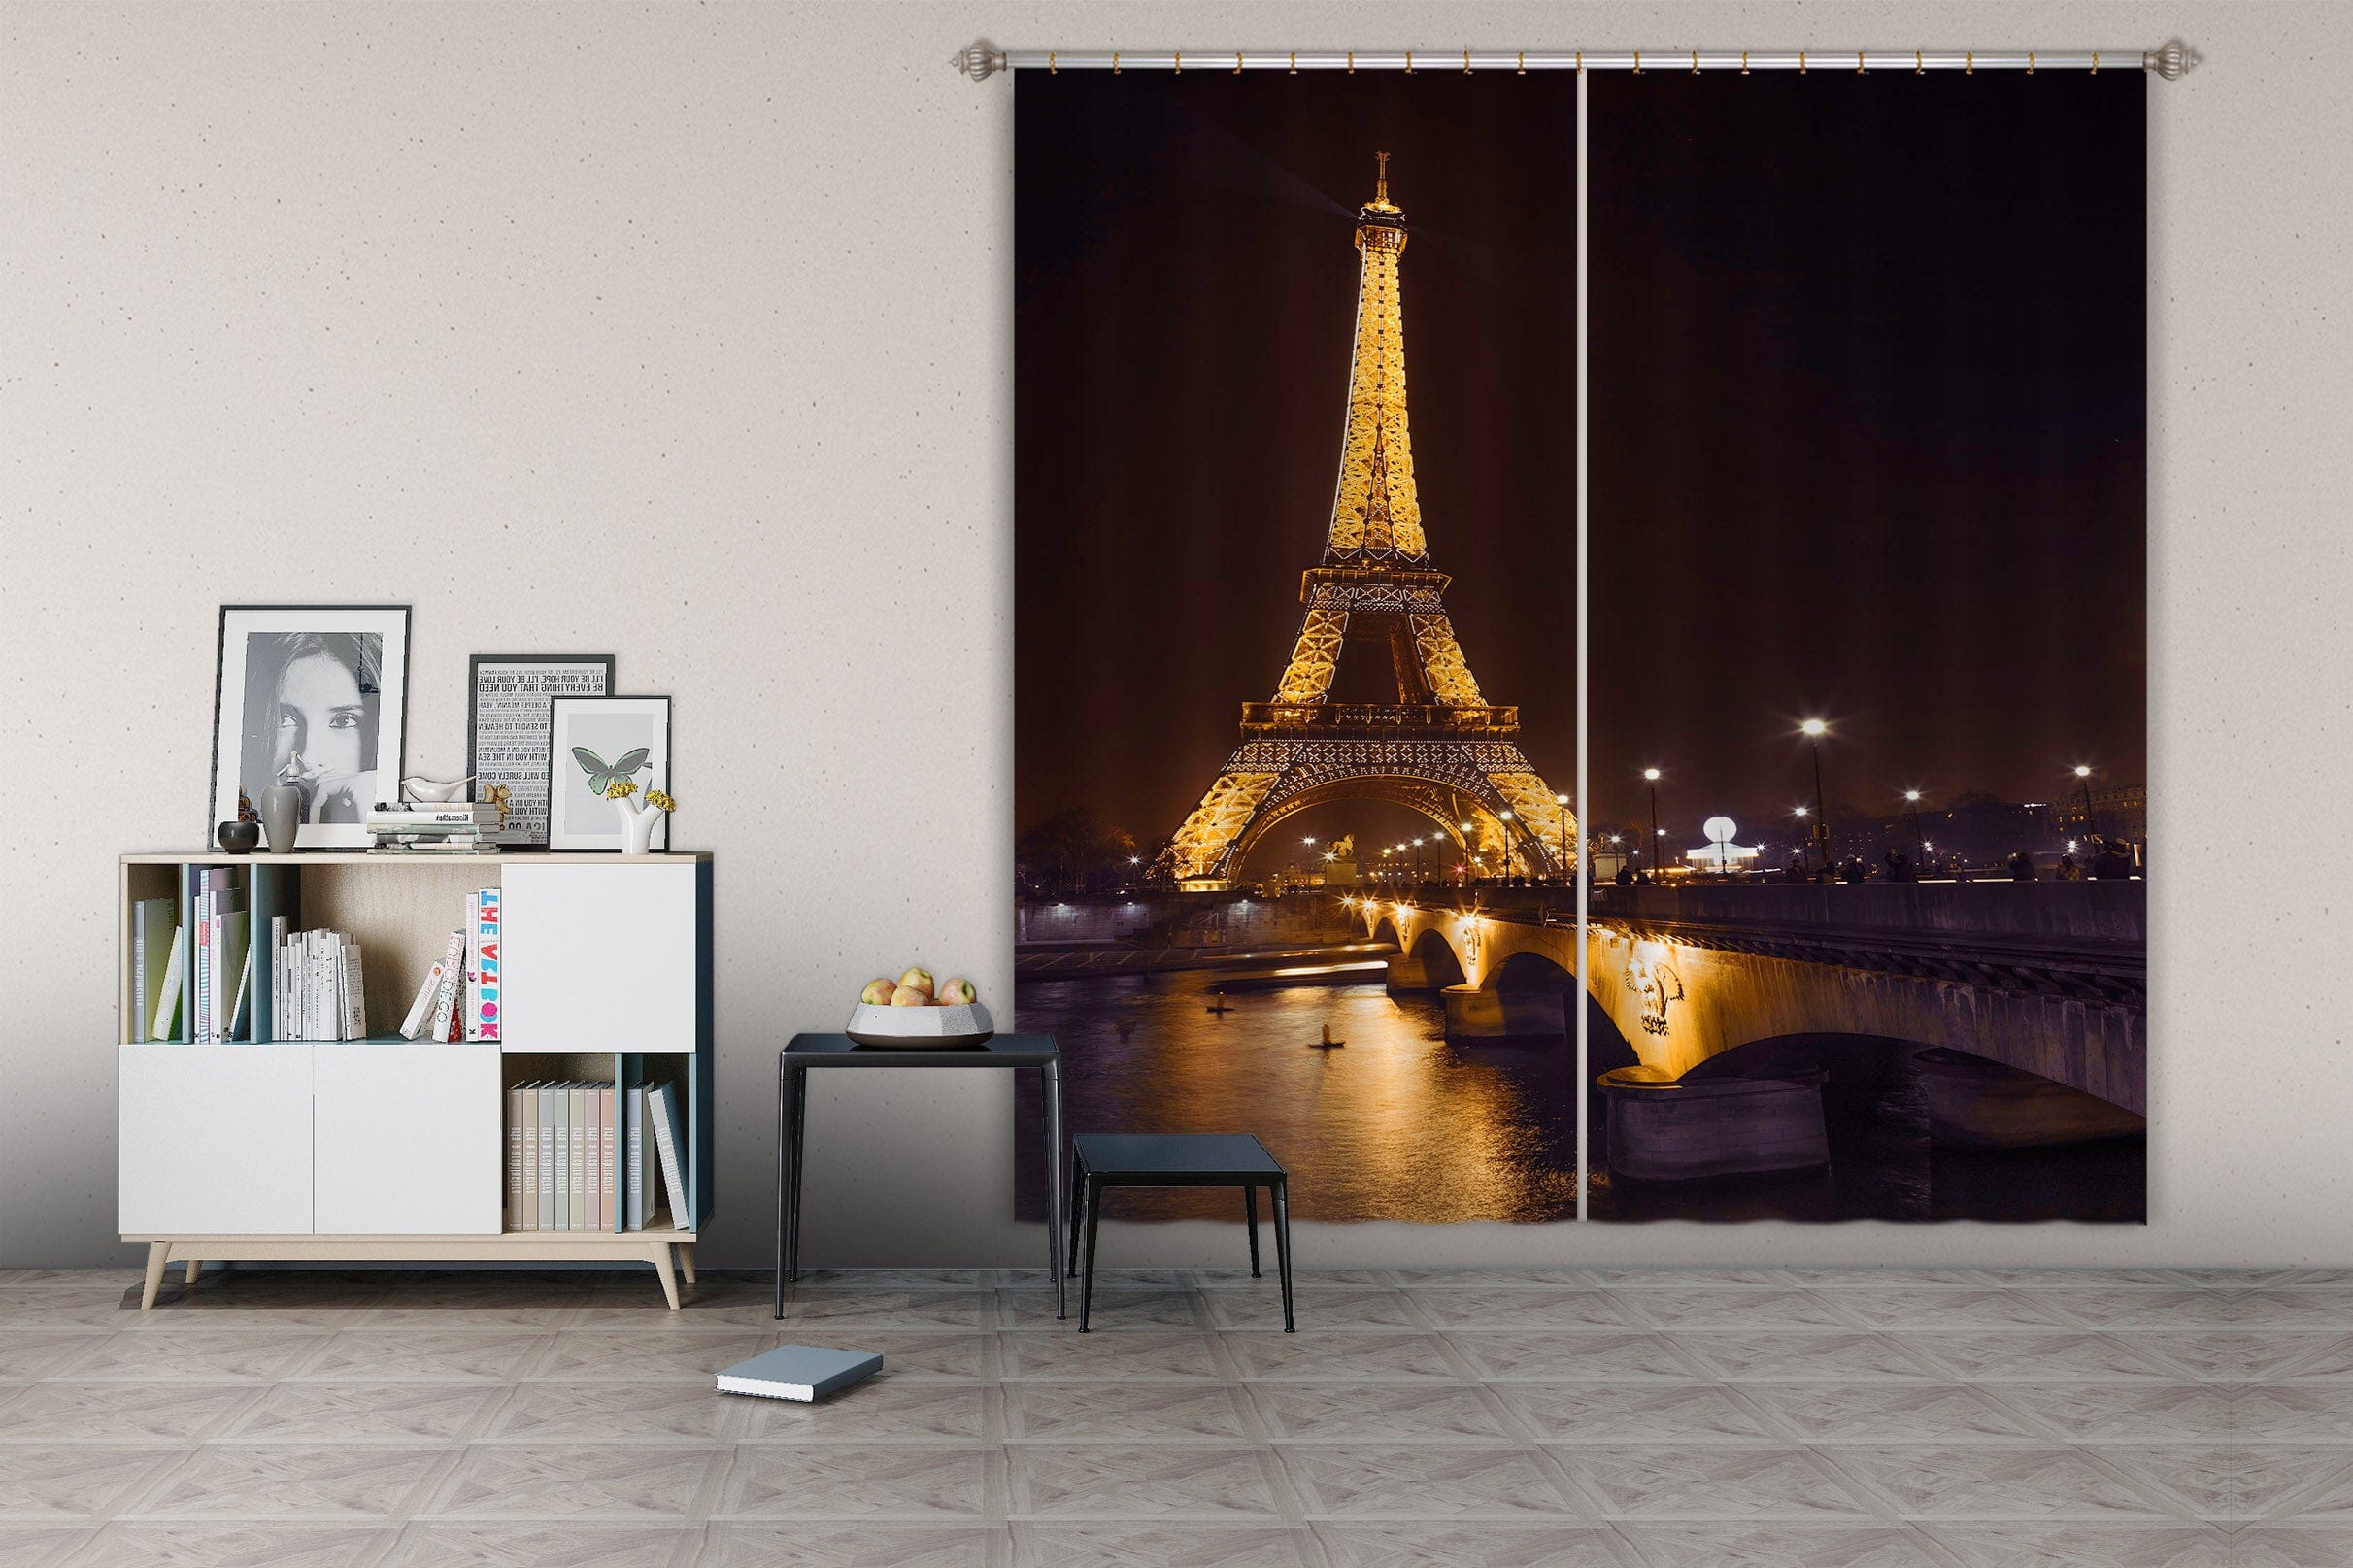 3D Eiffel Tower 003 Assaf Frank Curtain Curtains Drapes Curtains AJ Creativity Home 